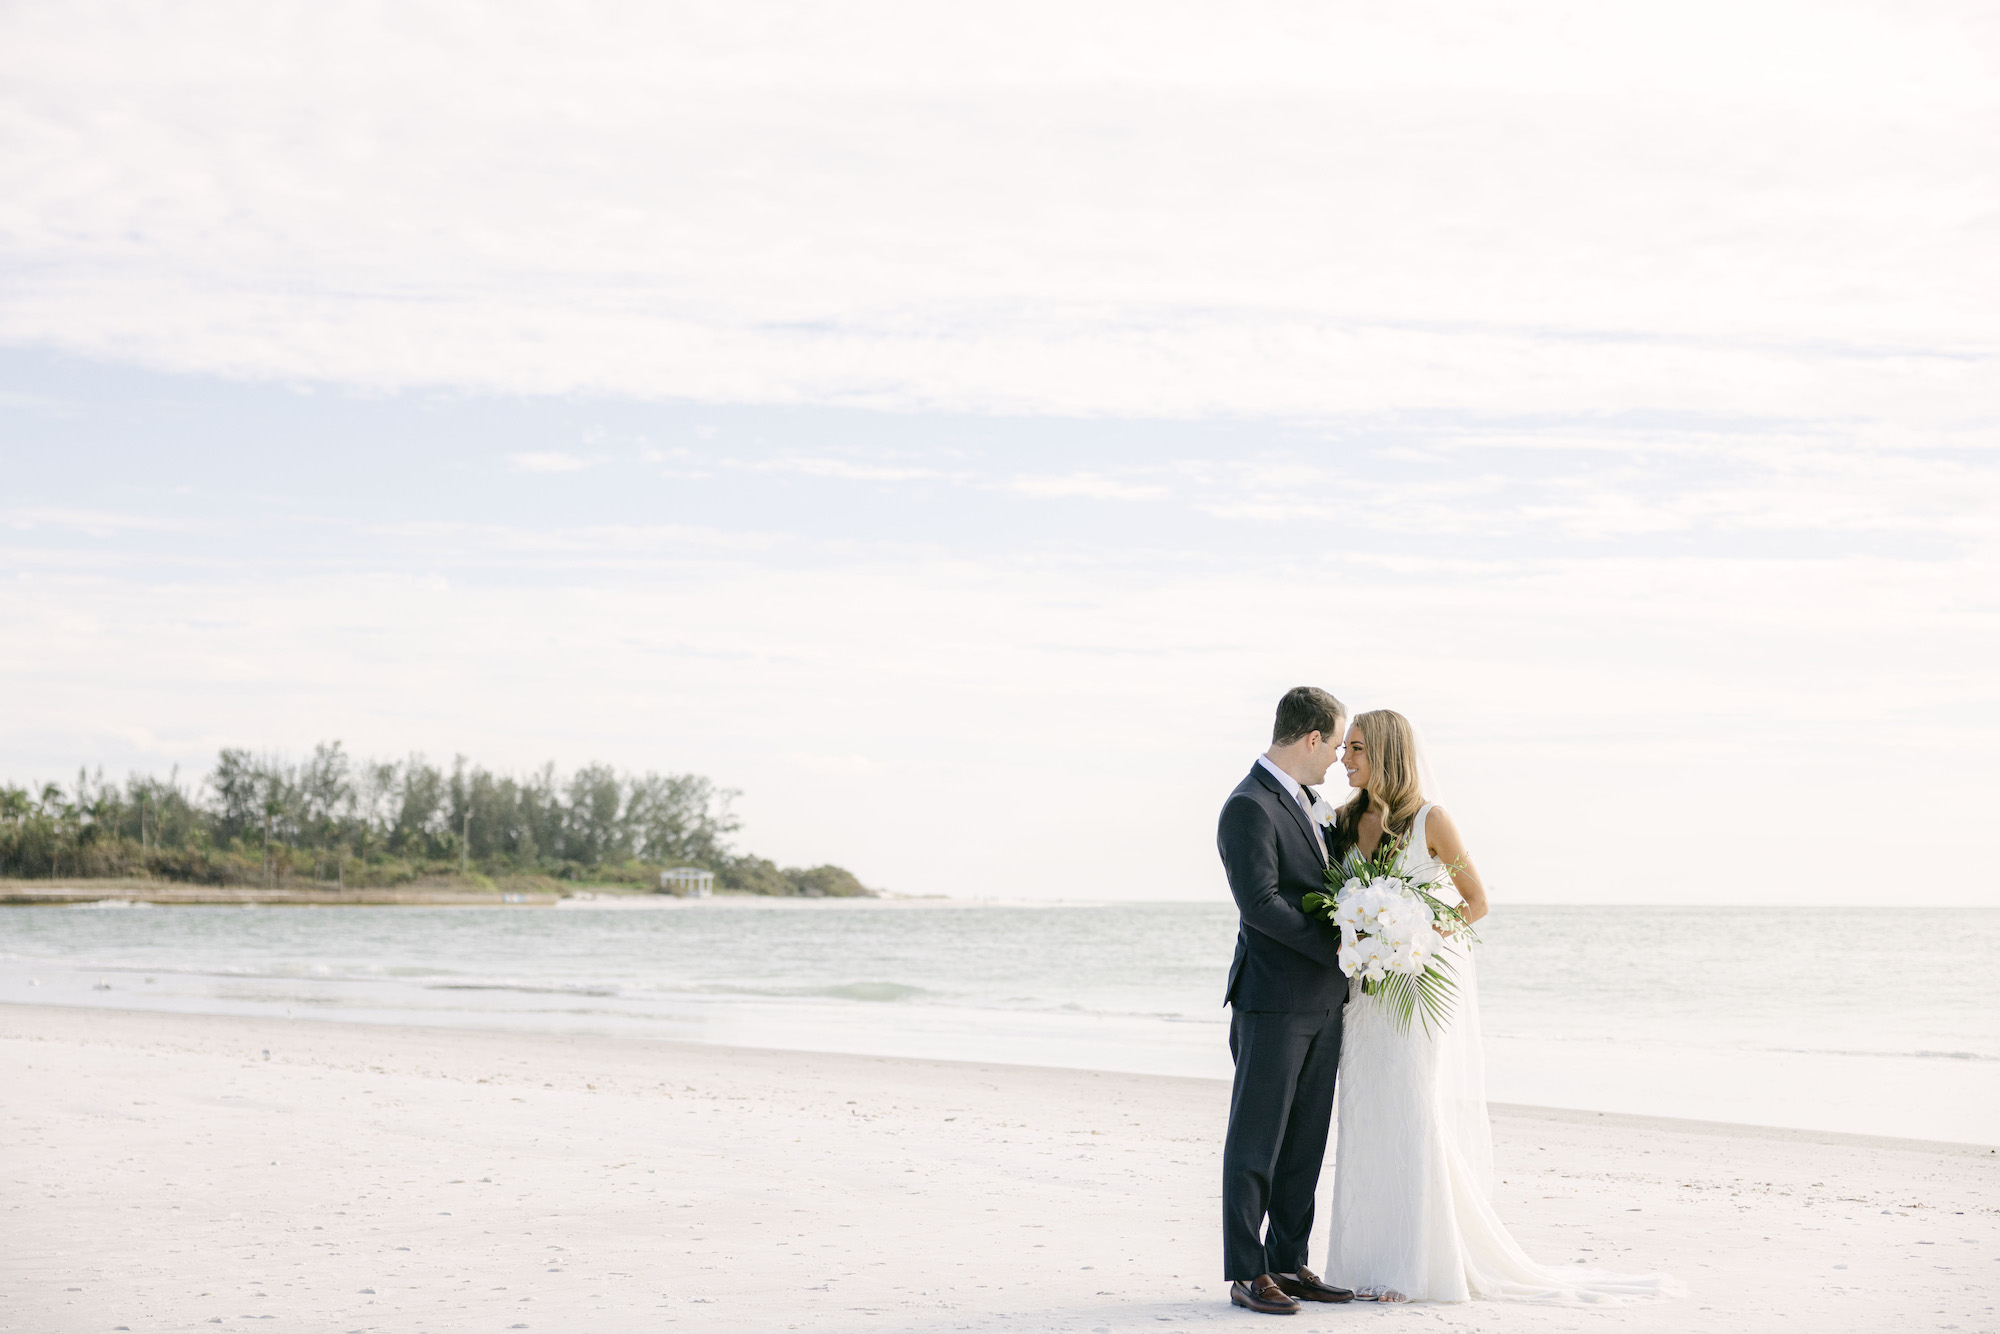 Intimate Sarasota Beach Bride and Groom Wedding Portrait | Sarasota Wedding Venue The Resort at Longboat Key Club